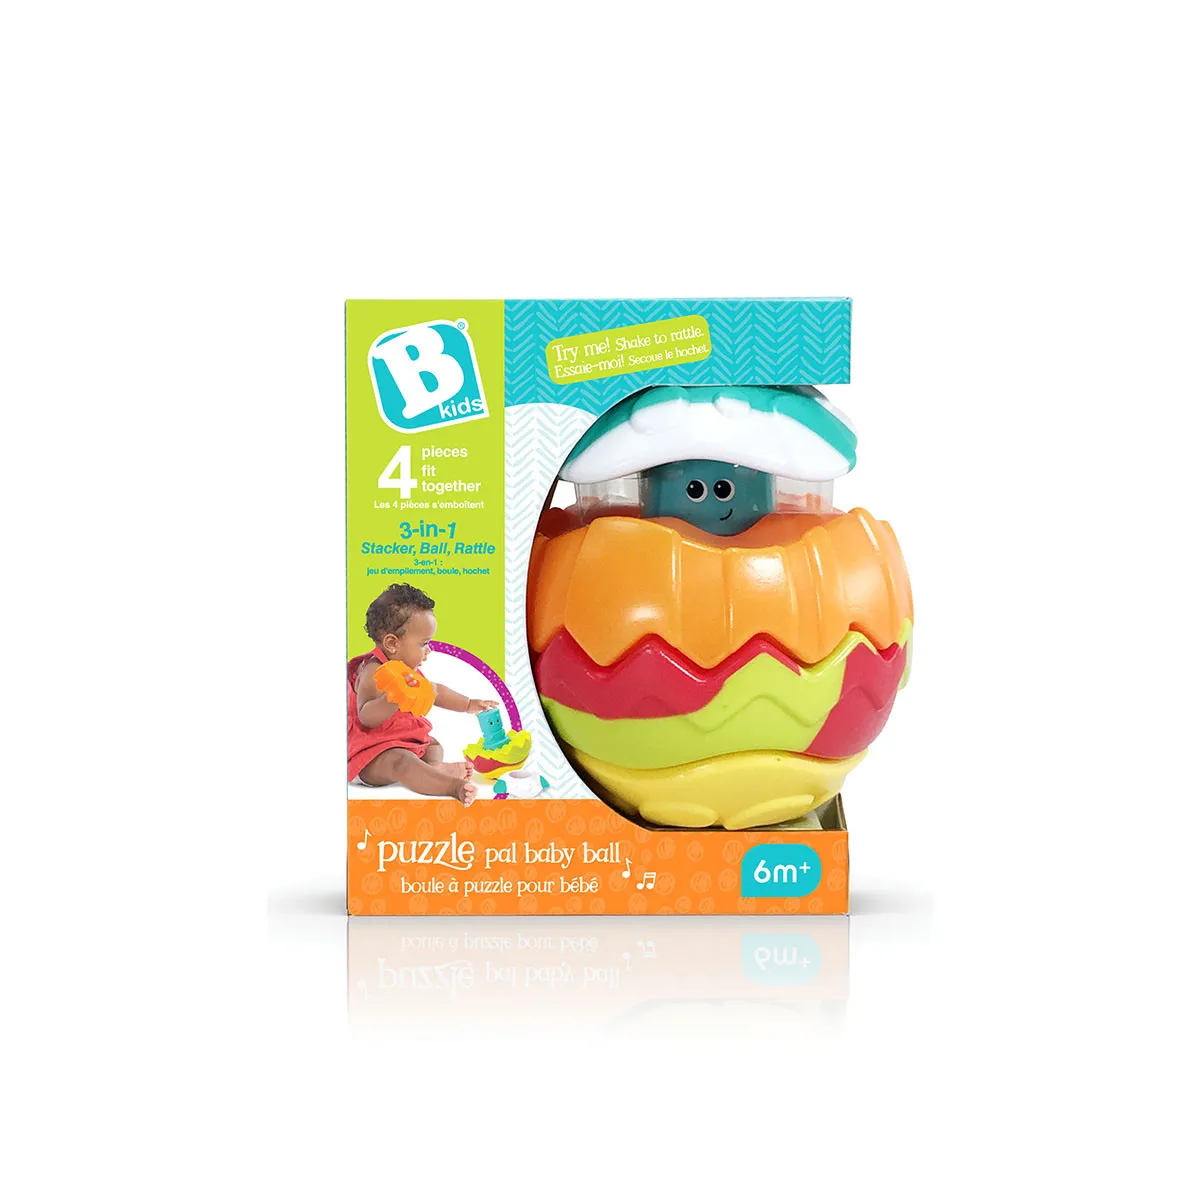 B kids edukativna igračka puzzle pal baby ball